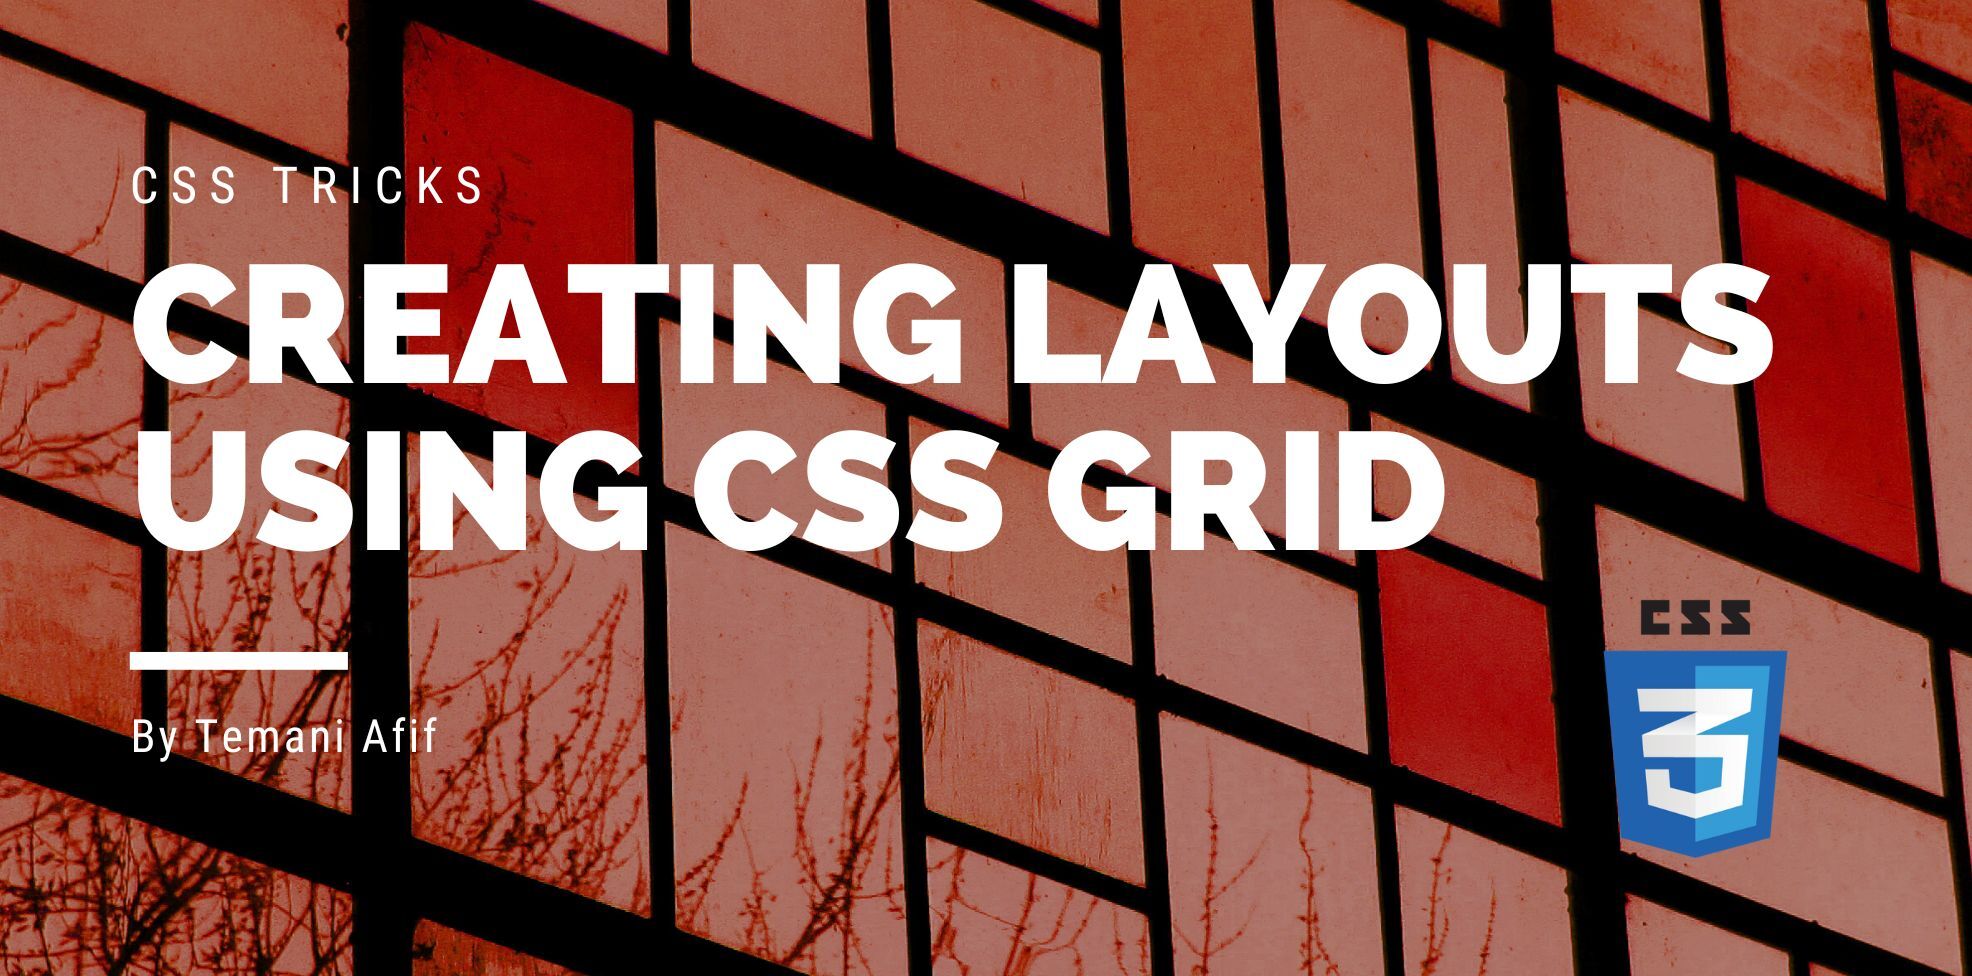 Modern Layouts using CSS Grid